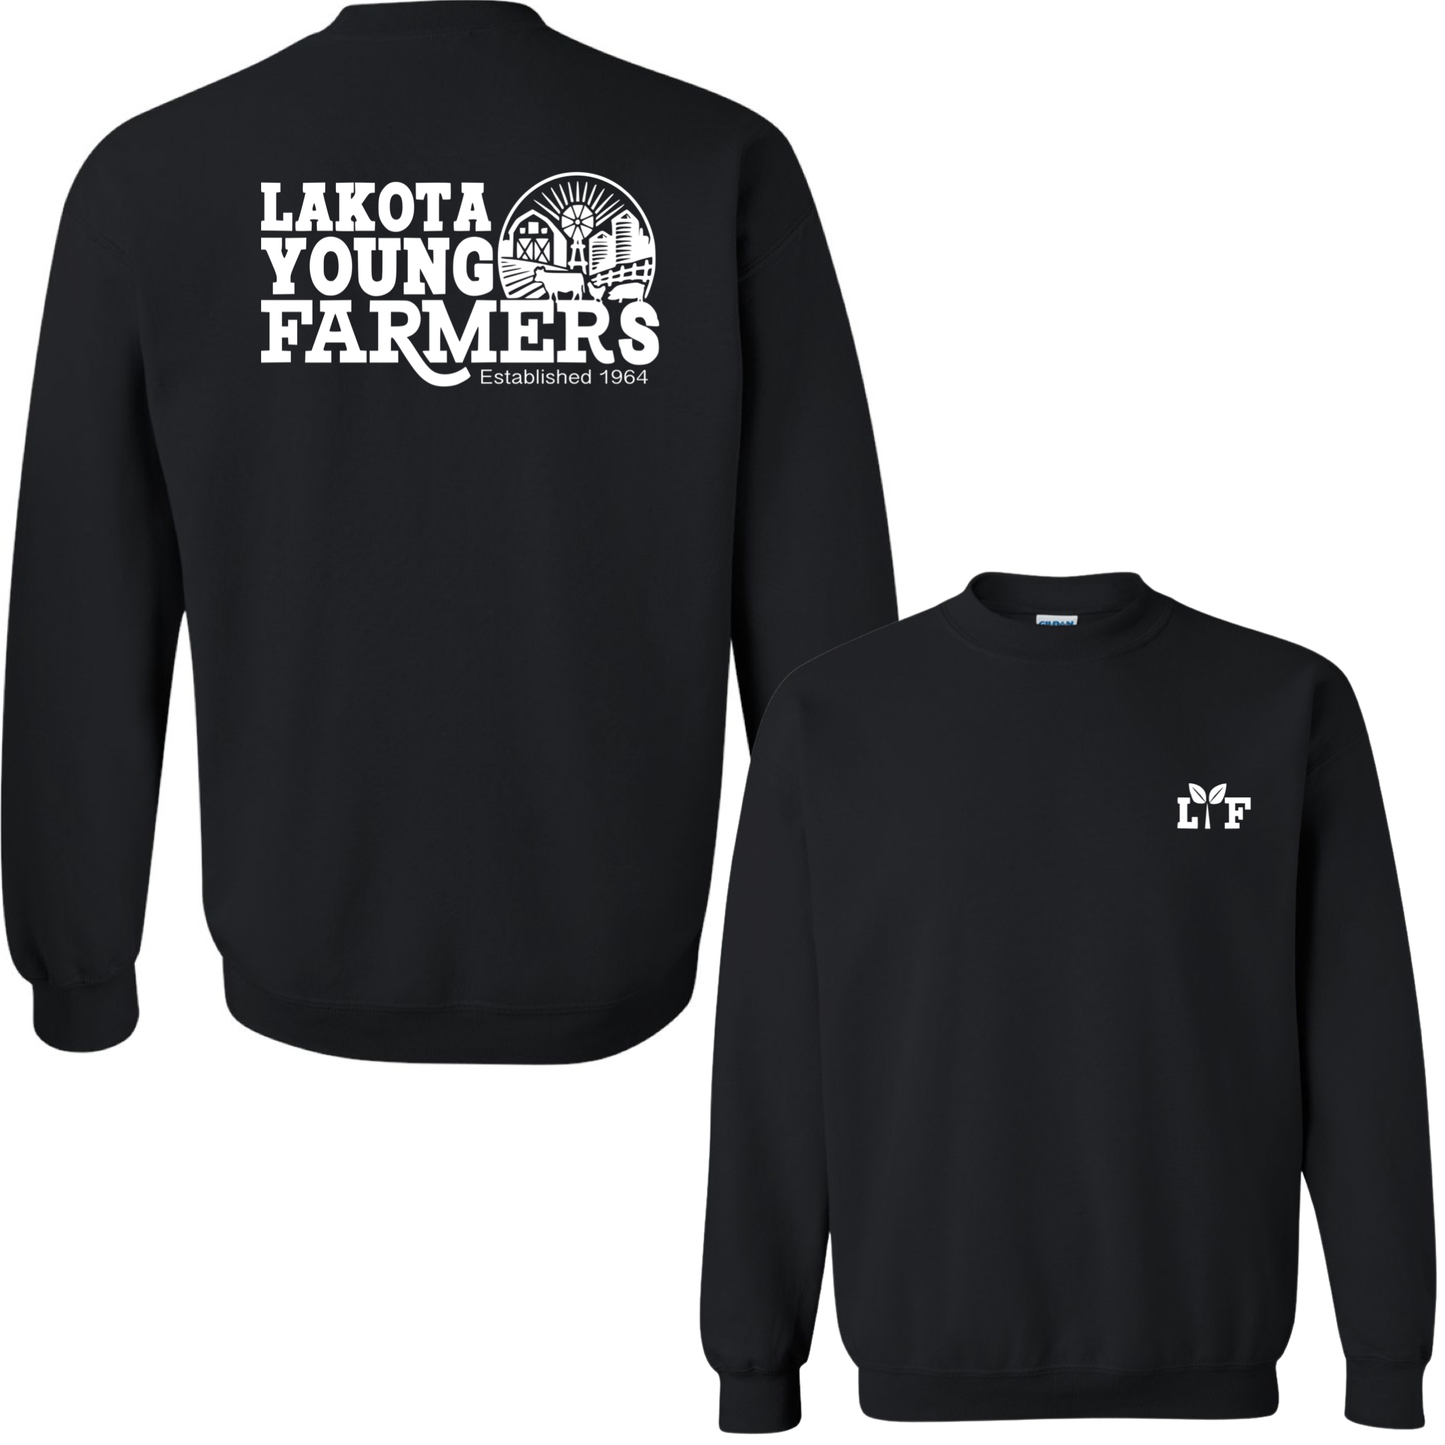 Lakota Young Farmers Adult Hoodies and Sweatshirts